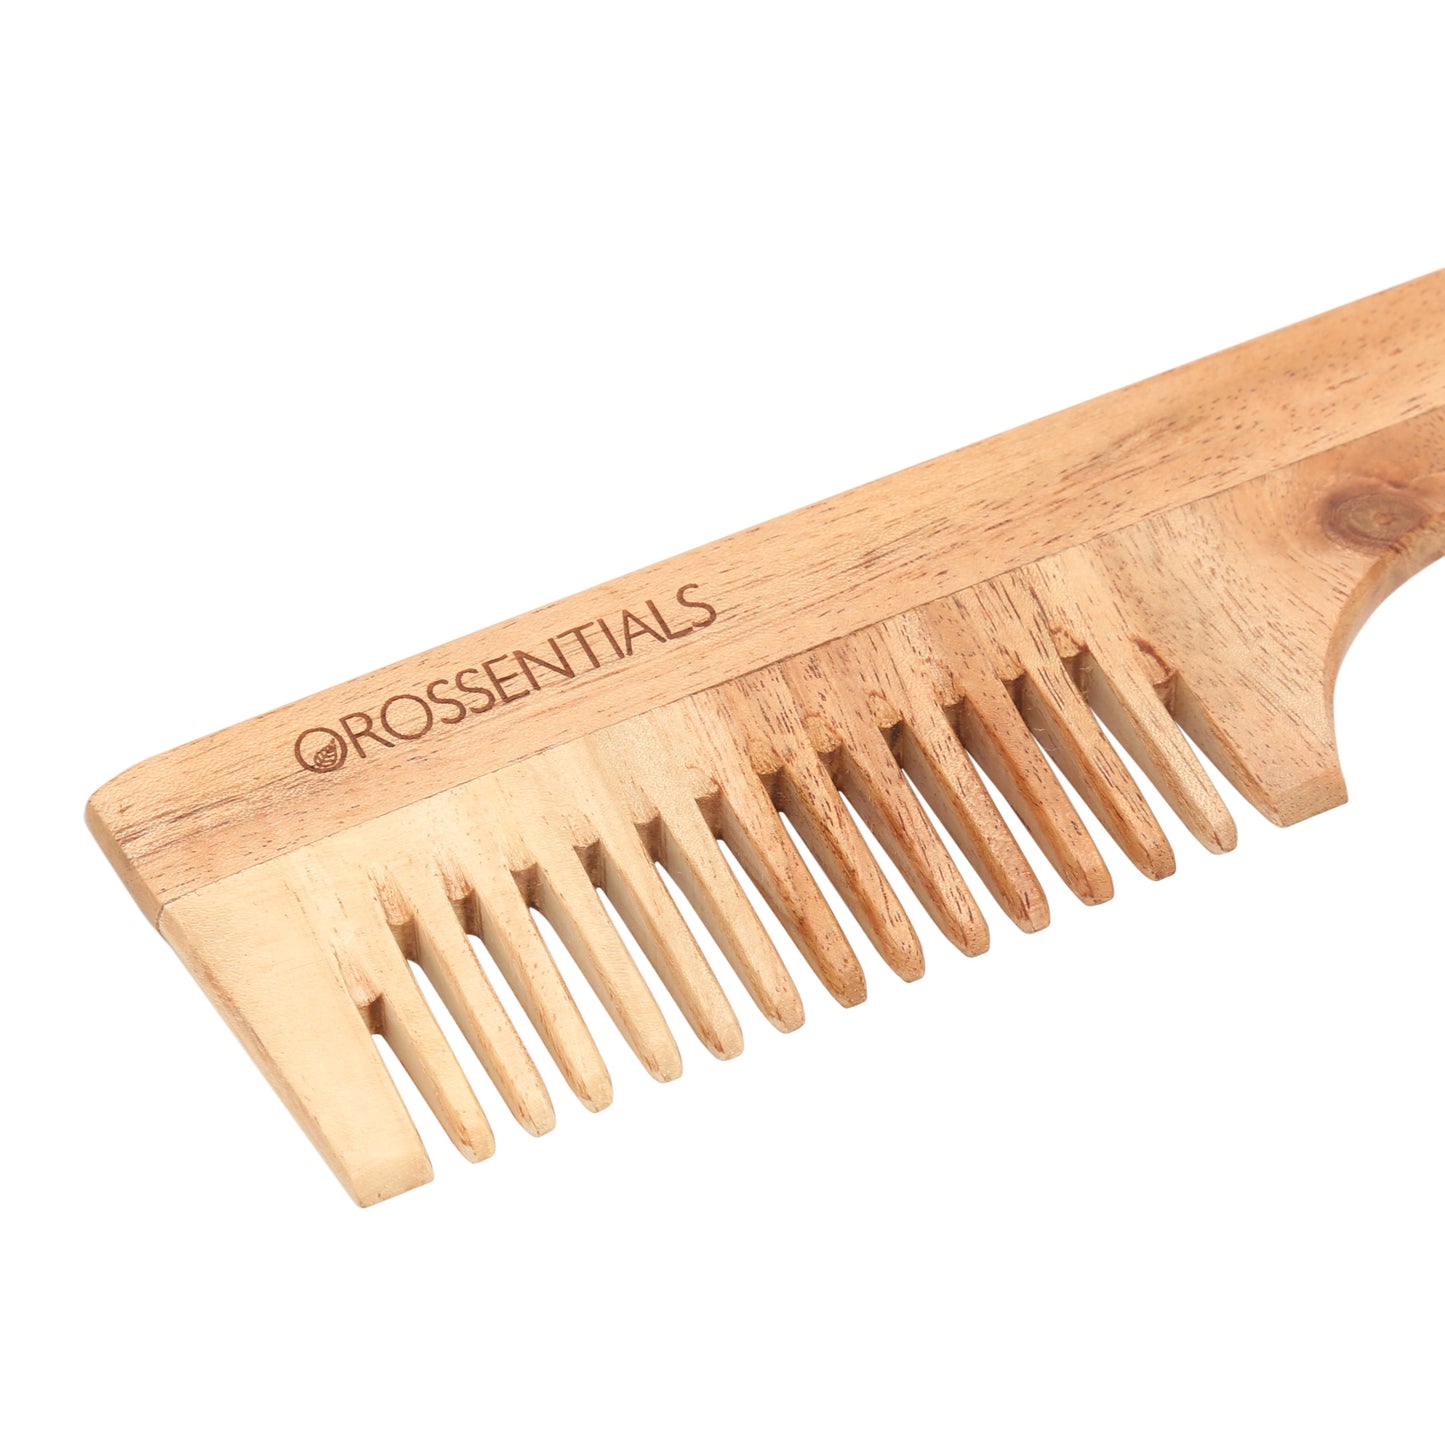 Wooden Comb Set of 3- Handle, Entangle, Single teeth